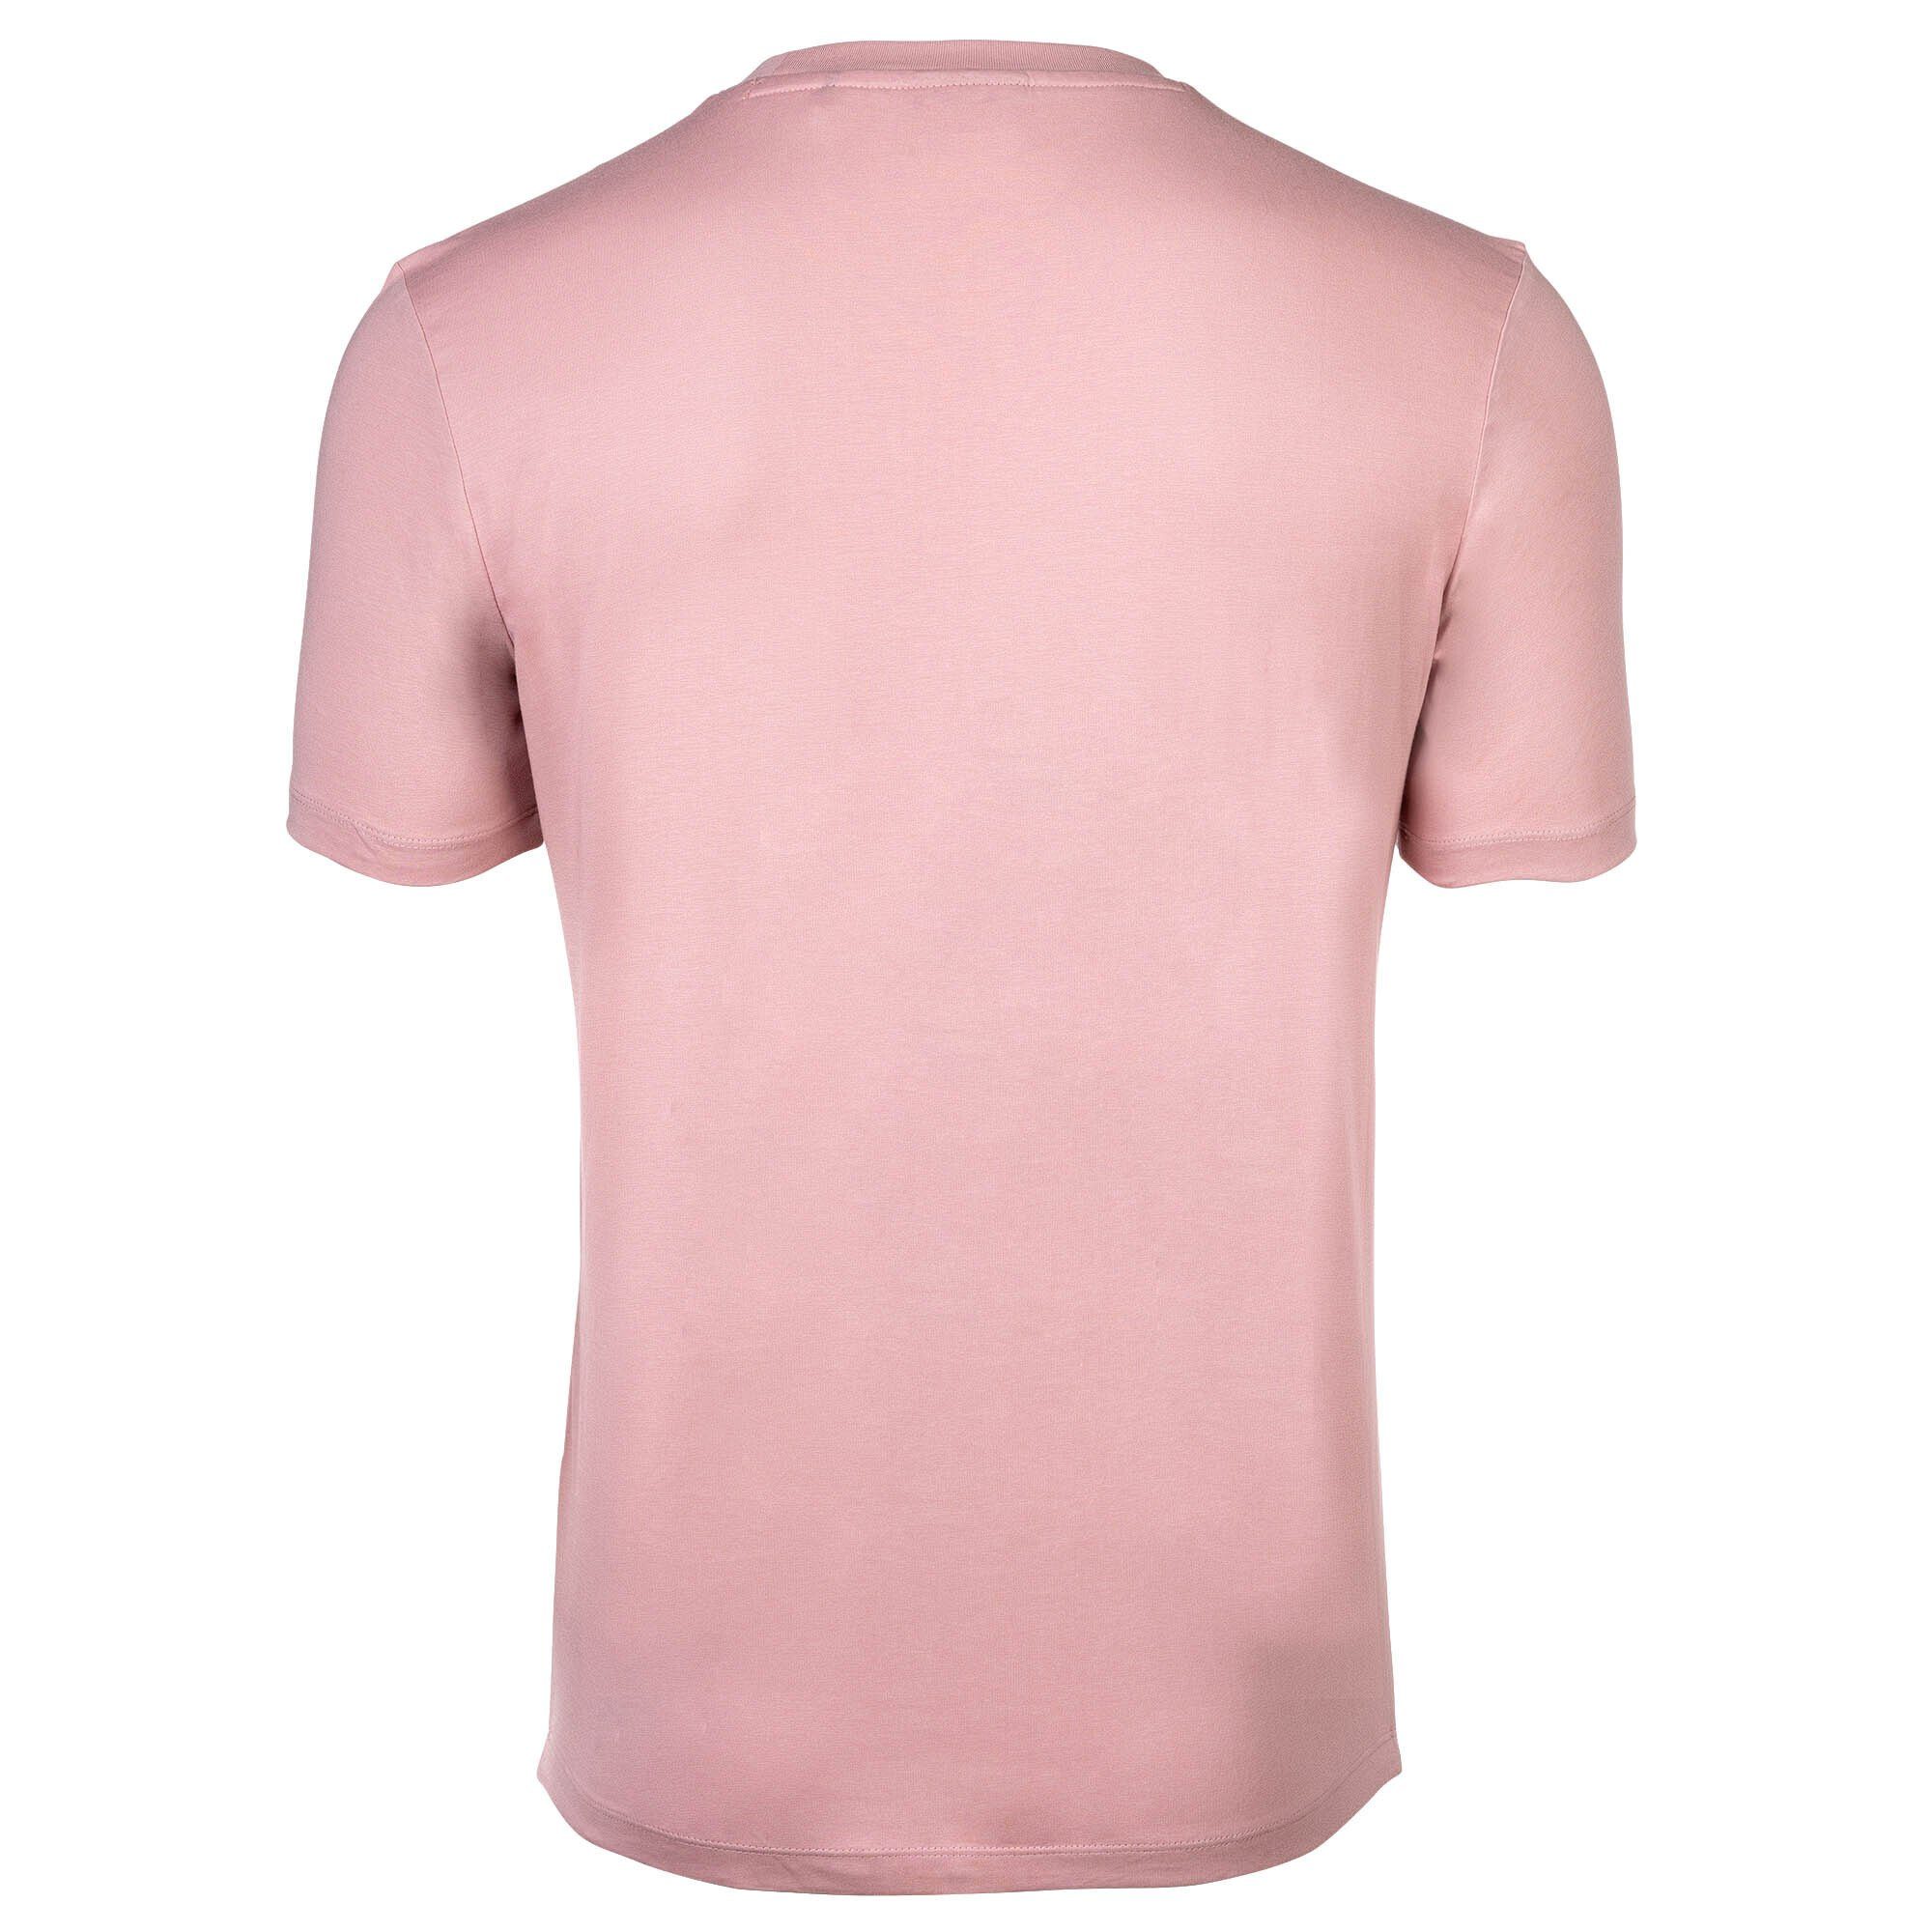 Pink) Rosa Herren T-Shirt Rundhals, Dulive222, Kurzarm HUGO - T-Shirt (Pastel